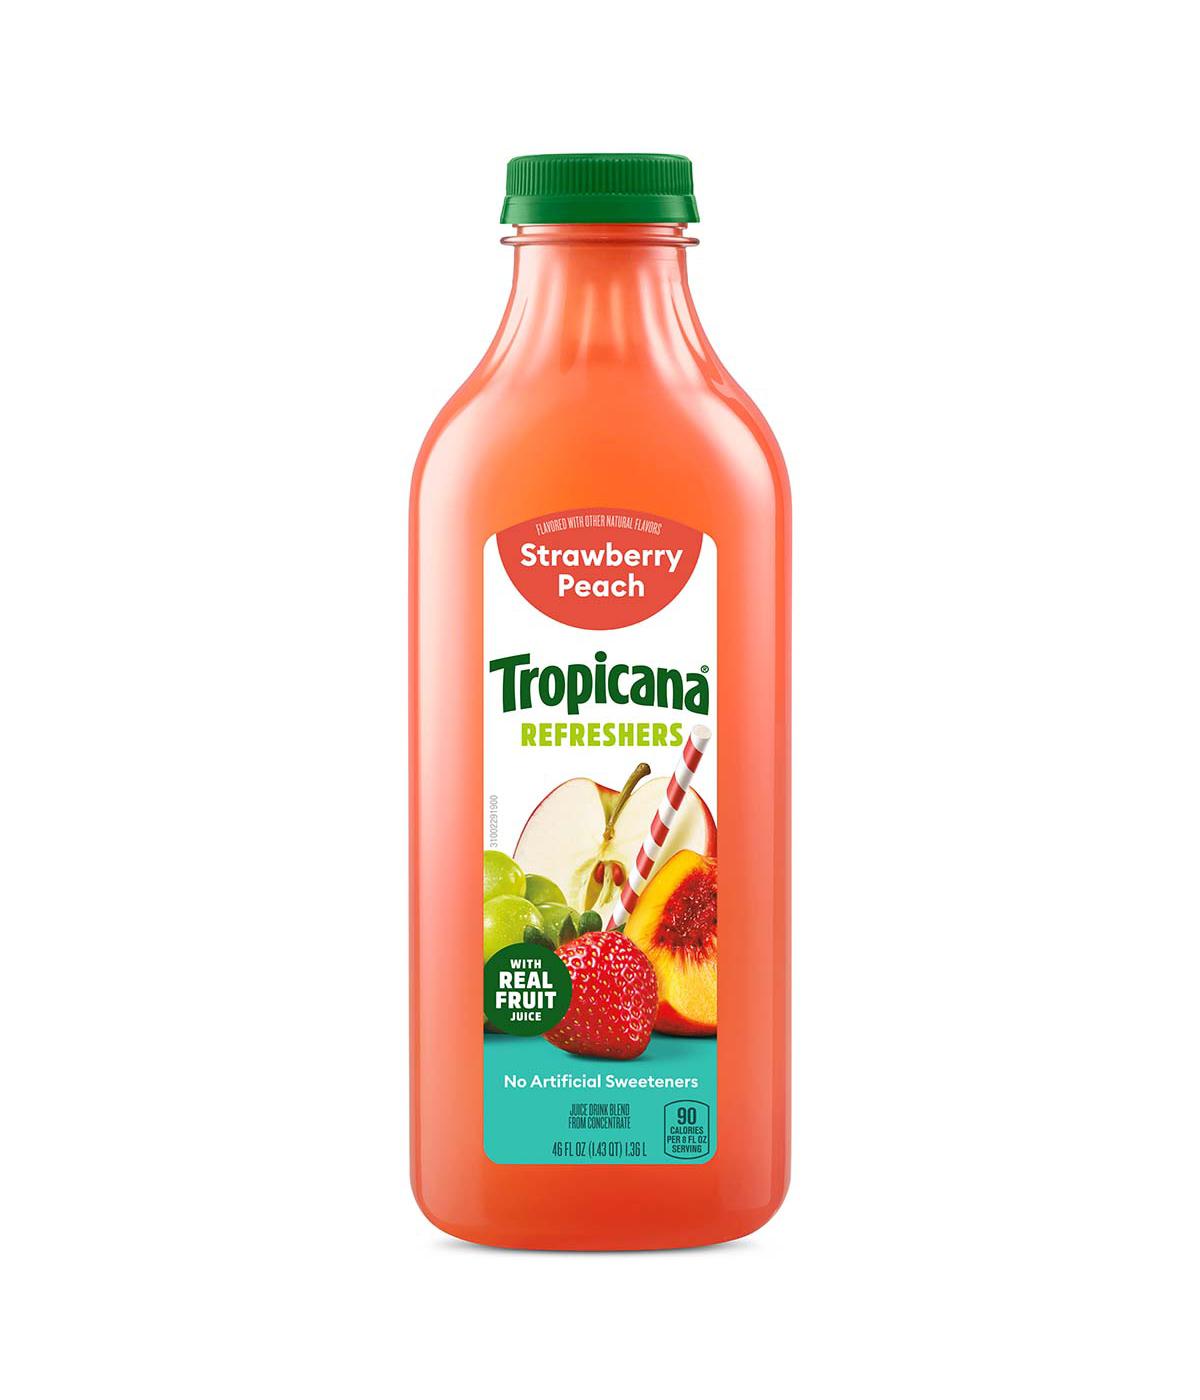 Tropicana Refreshers - Strawberry Peach; image 1 of 2